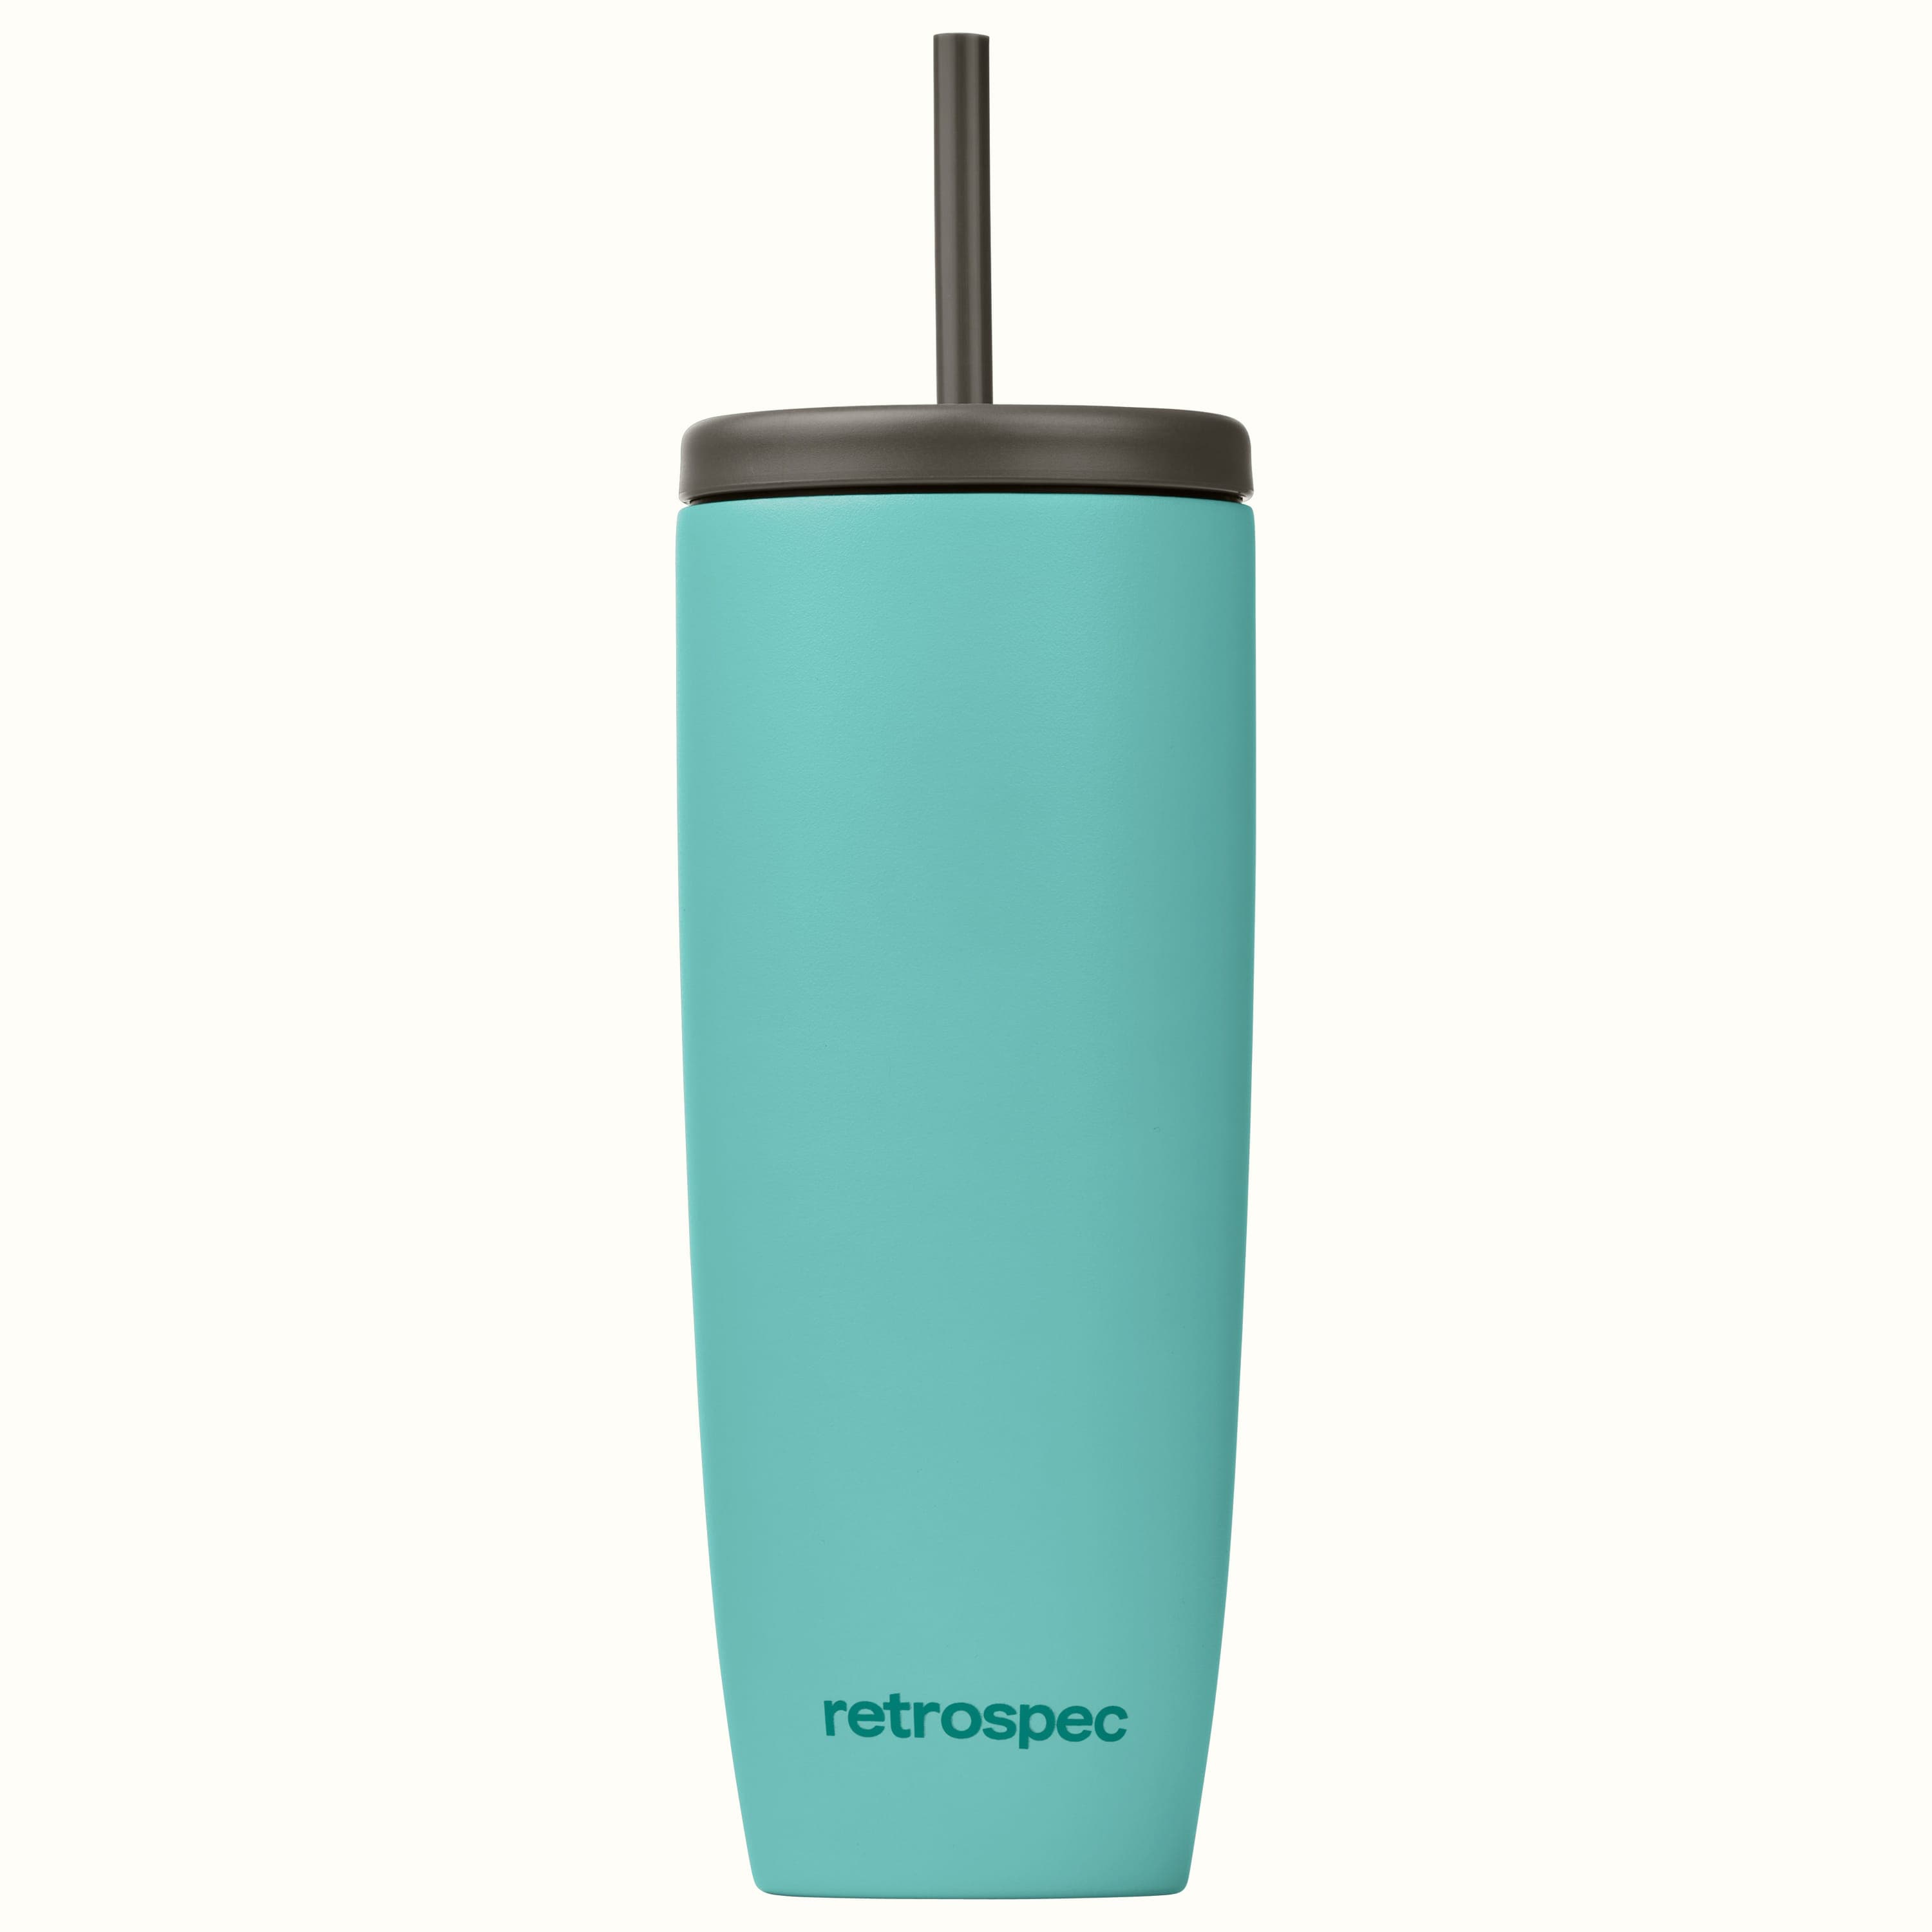 Waterdrop All-Purpose Edition Tumbler - White Blossom - 34 oz - Coffee Tumbler - Coffee Mug - Travel Mug - Leak Proof Travel Mug